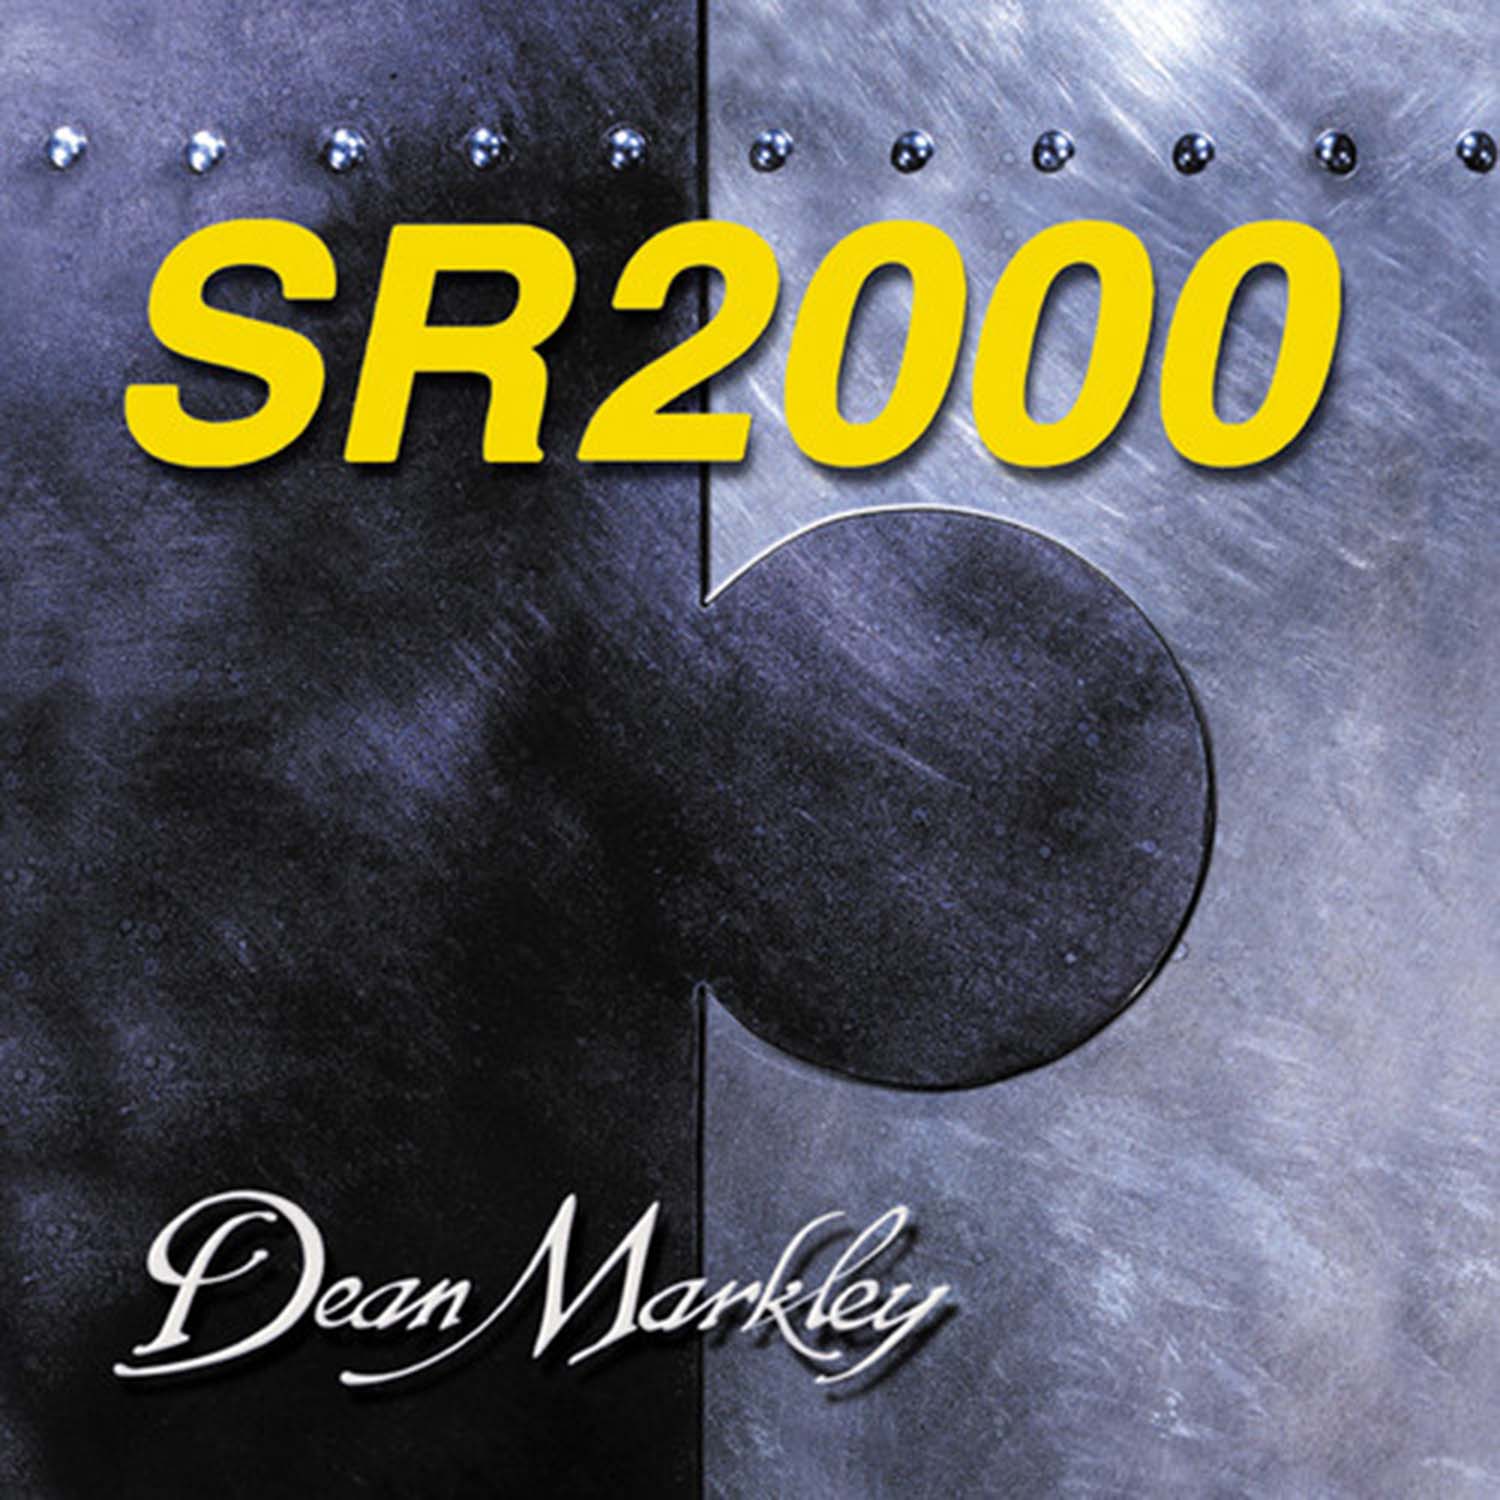 Dean Markley 2695 SR2000 Bass Guitar Strings - Hollywood DJ